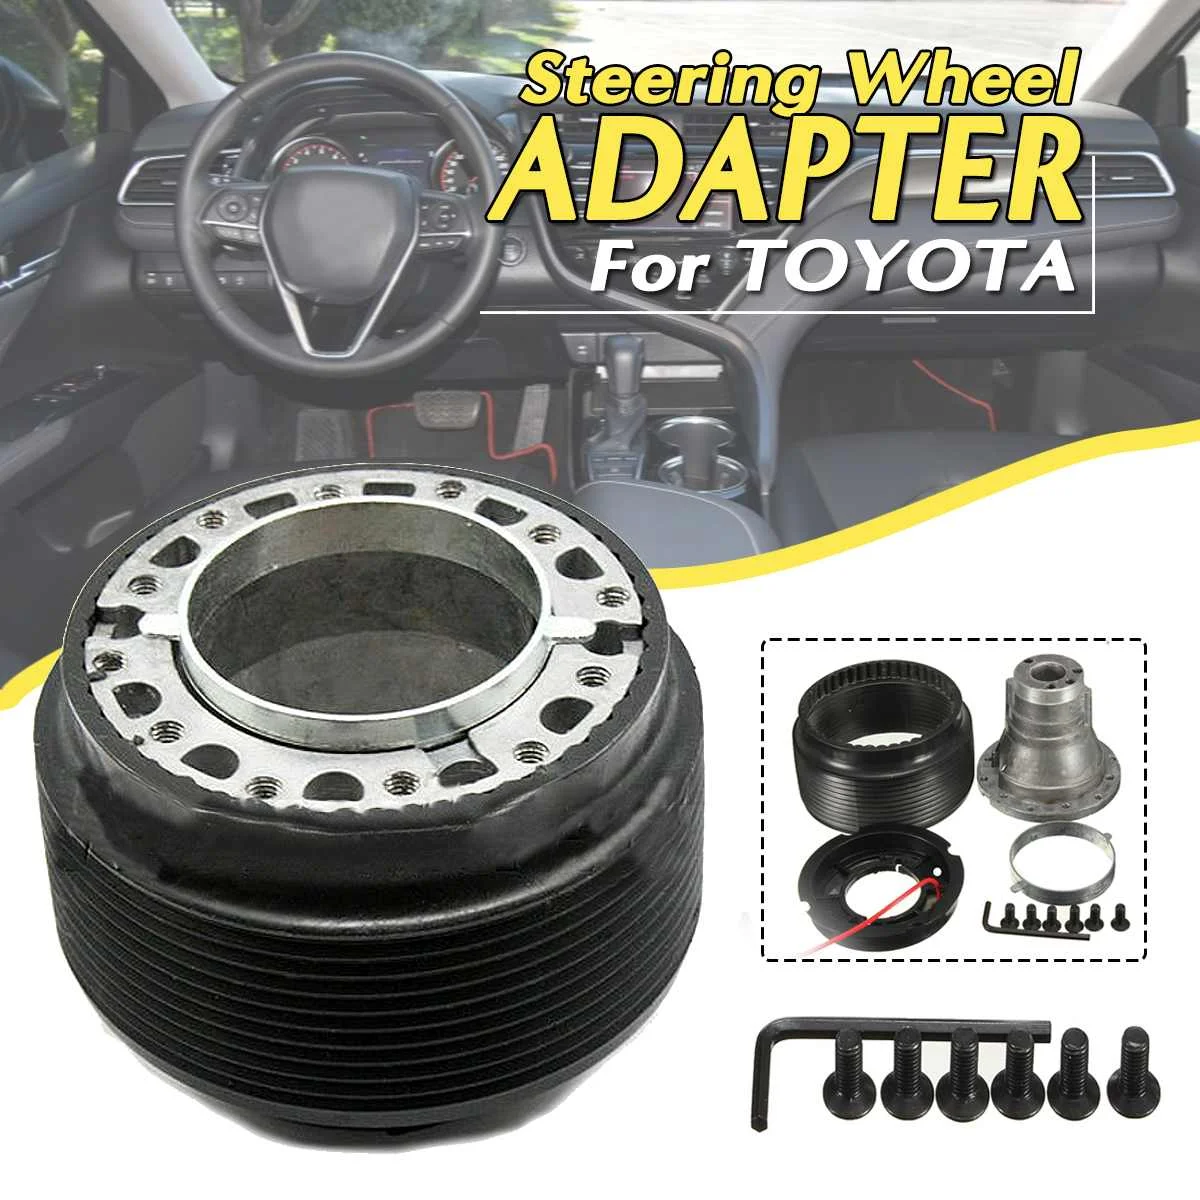 Aftermarket steering wheel boss hub kit adapter for Toyota Land Cruiser Corolla 